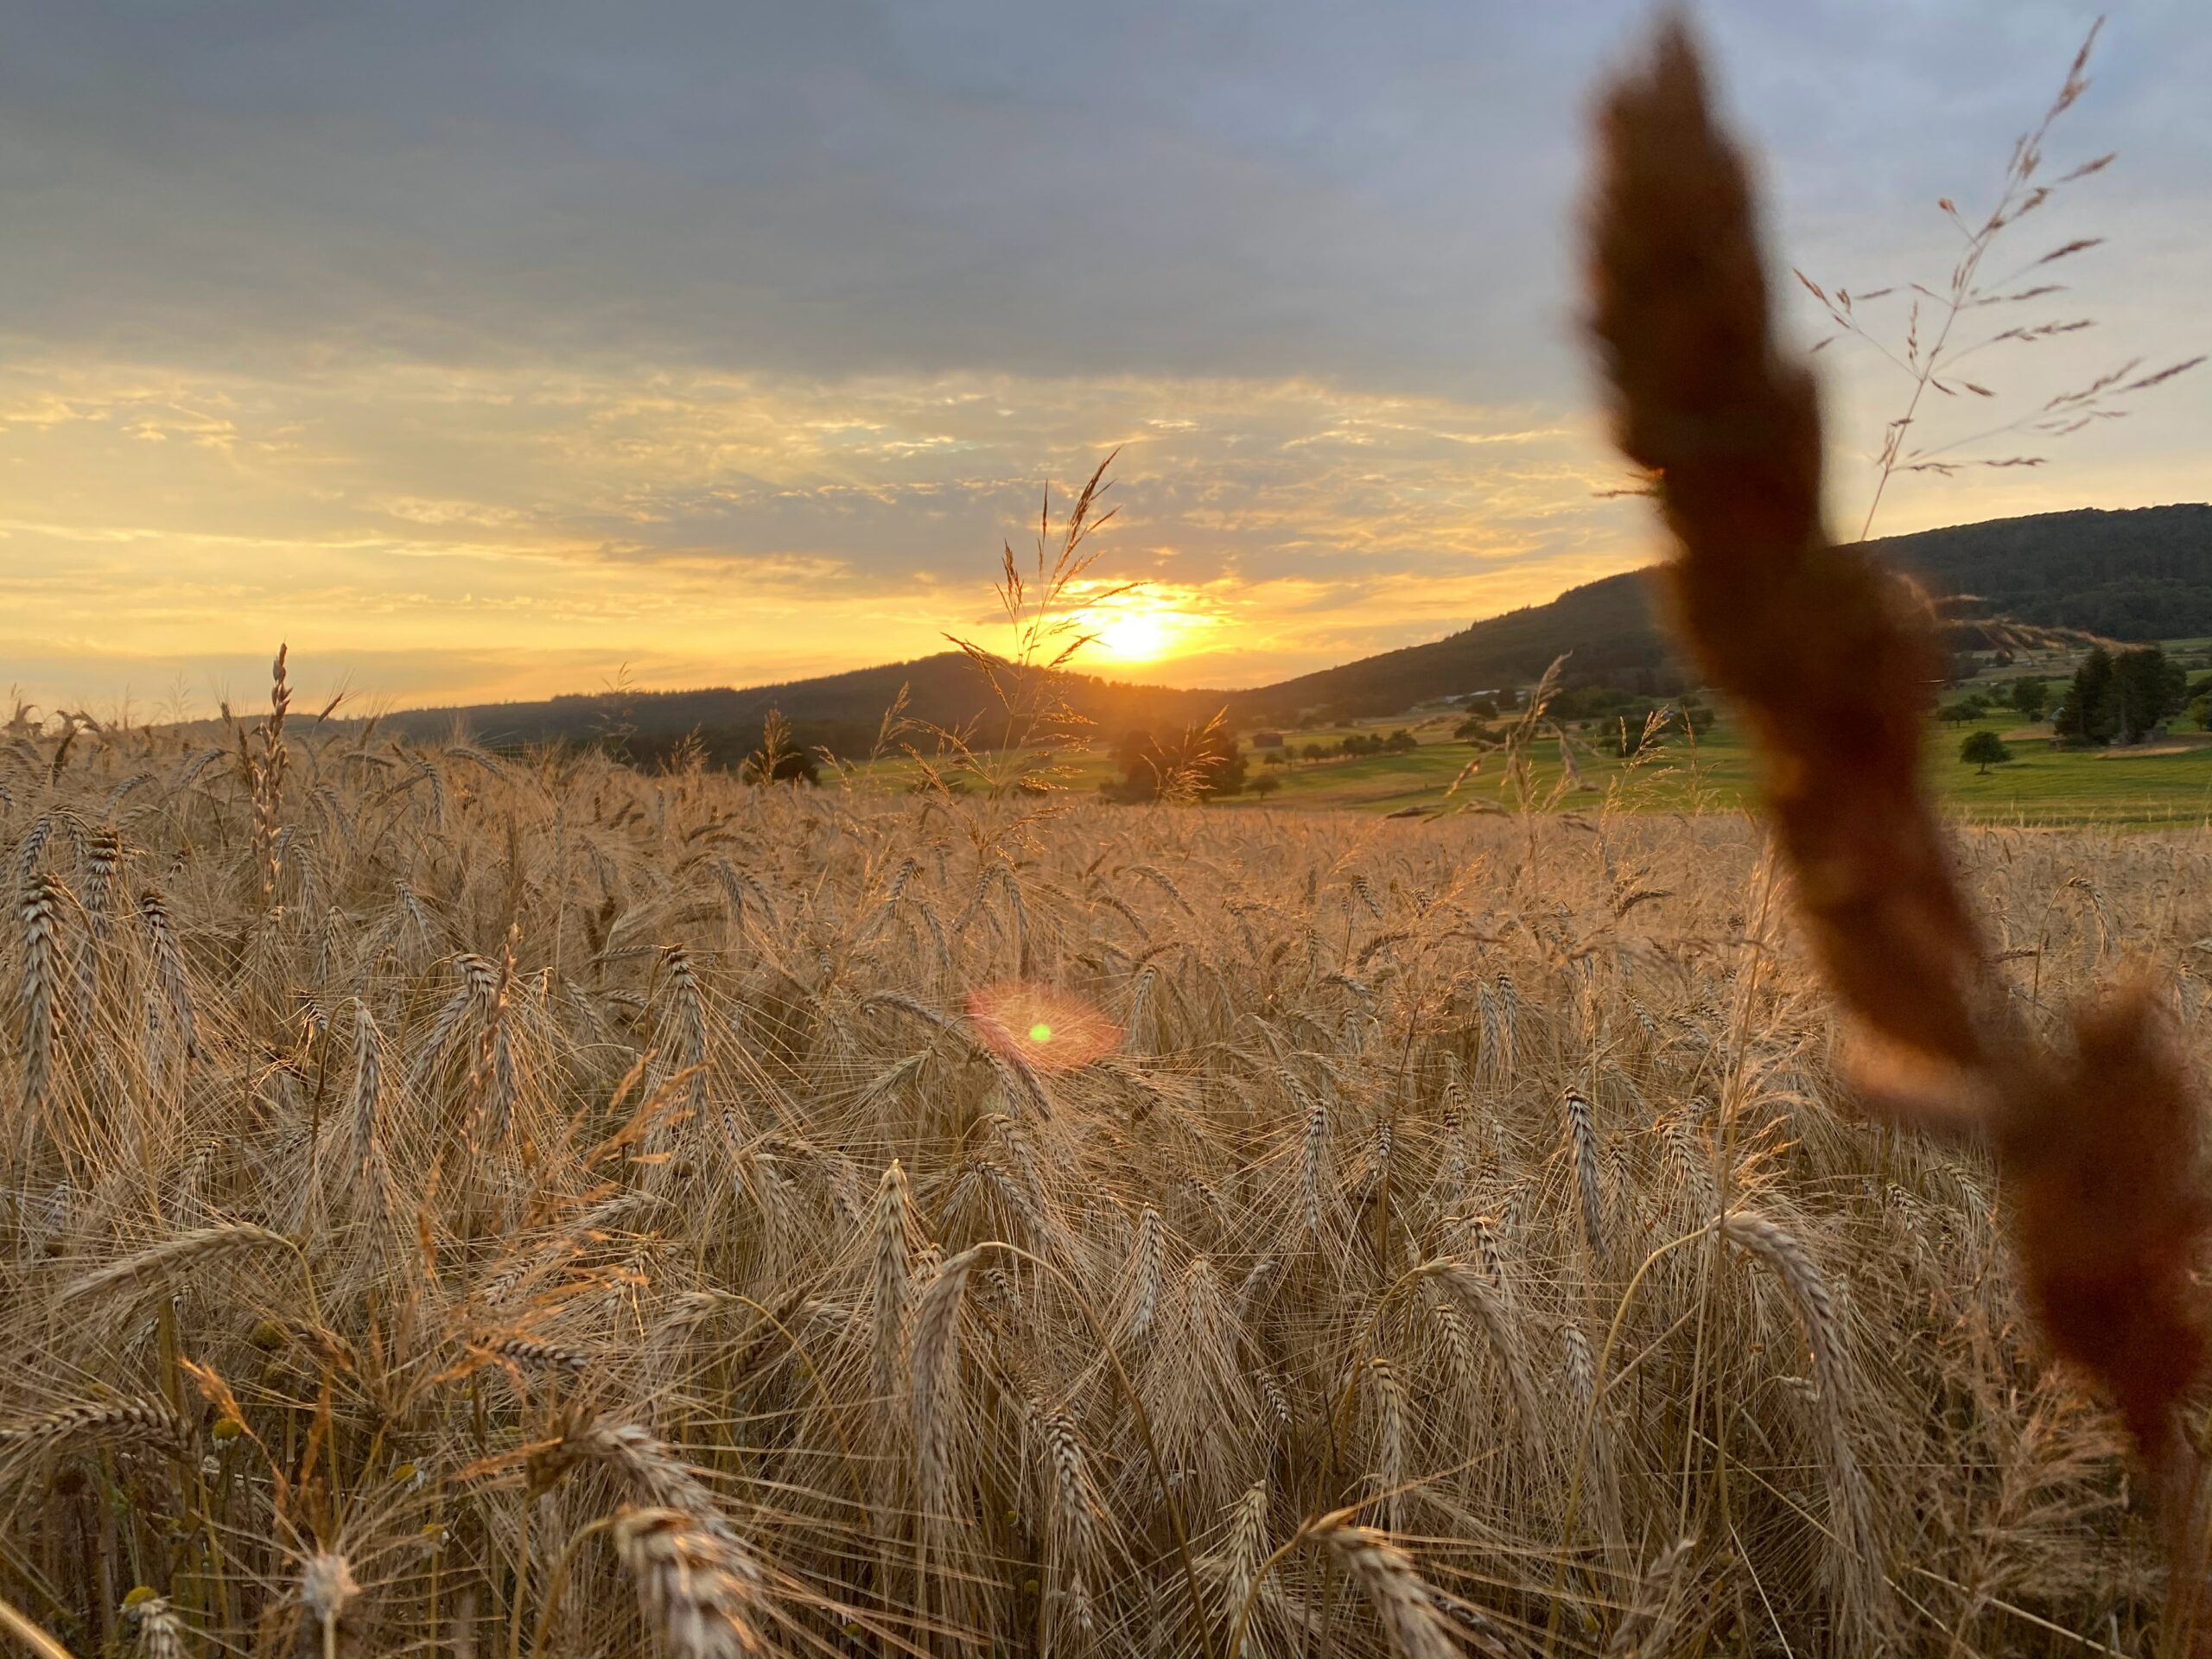 A sunrise over a wheat field